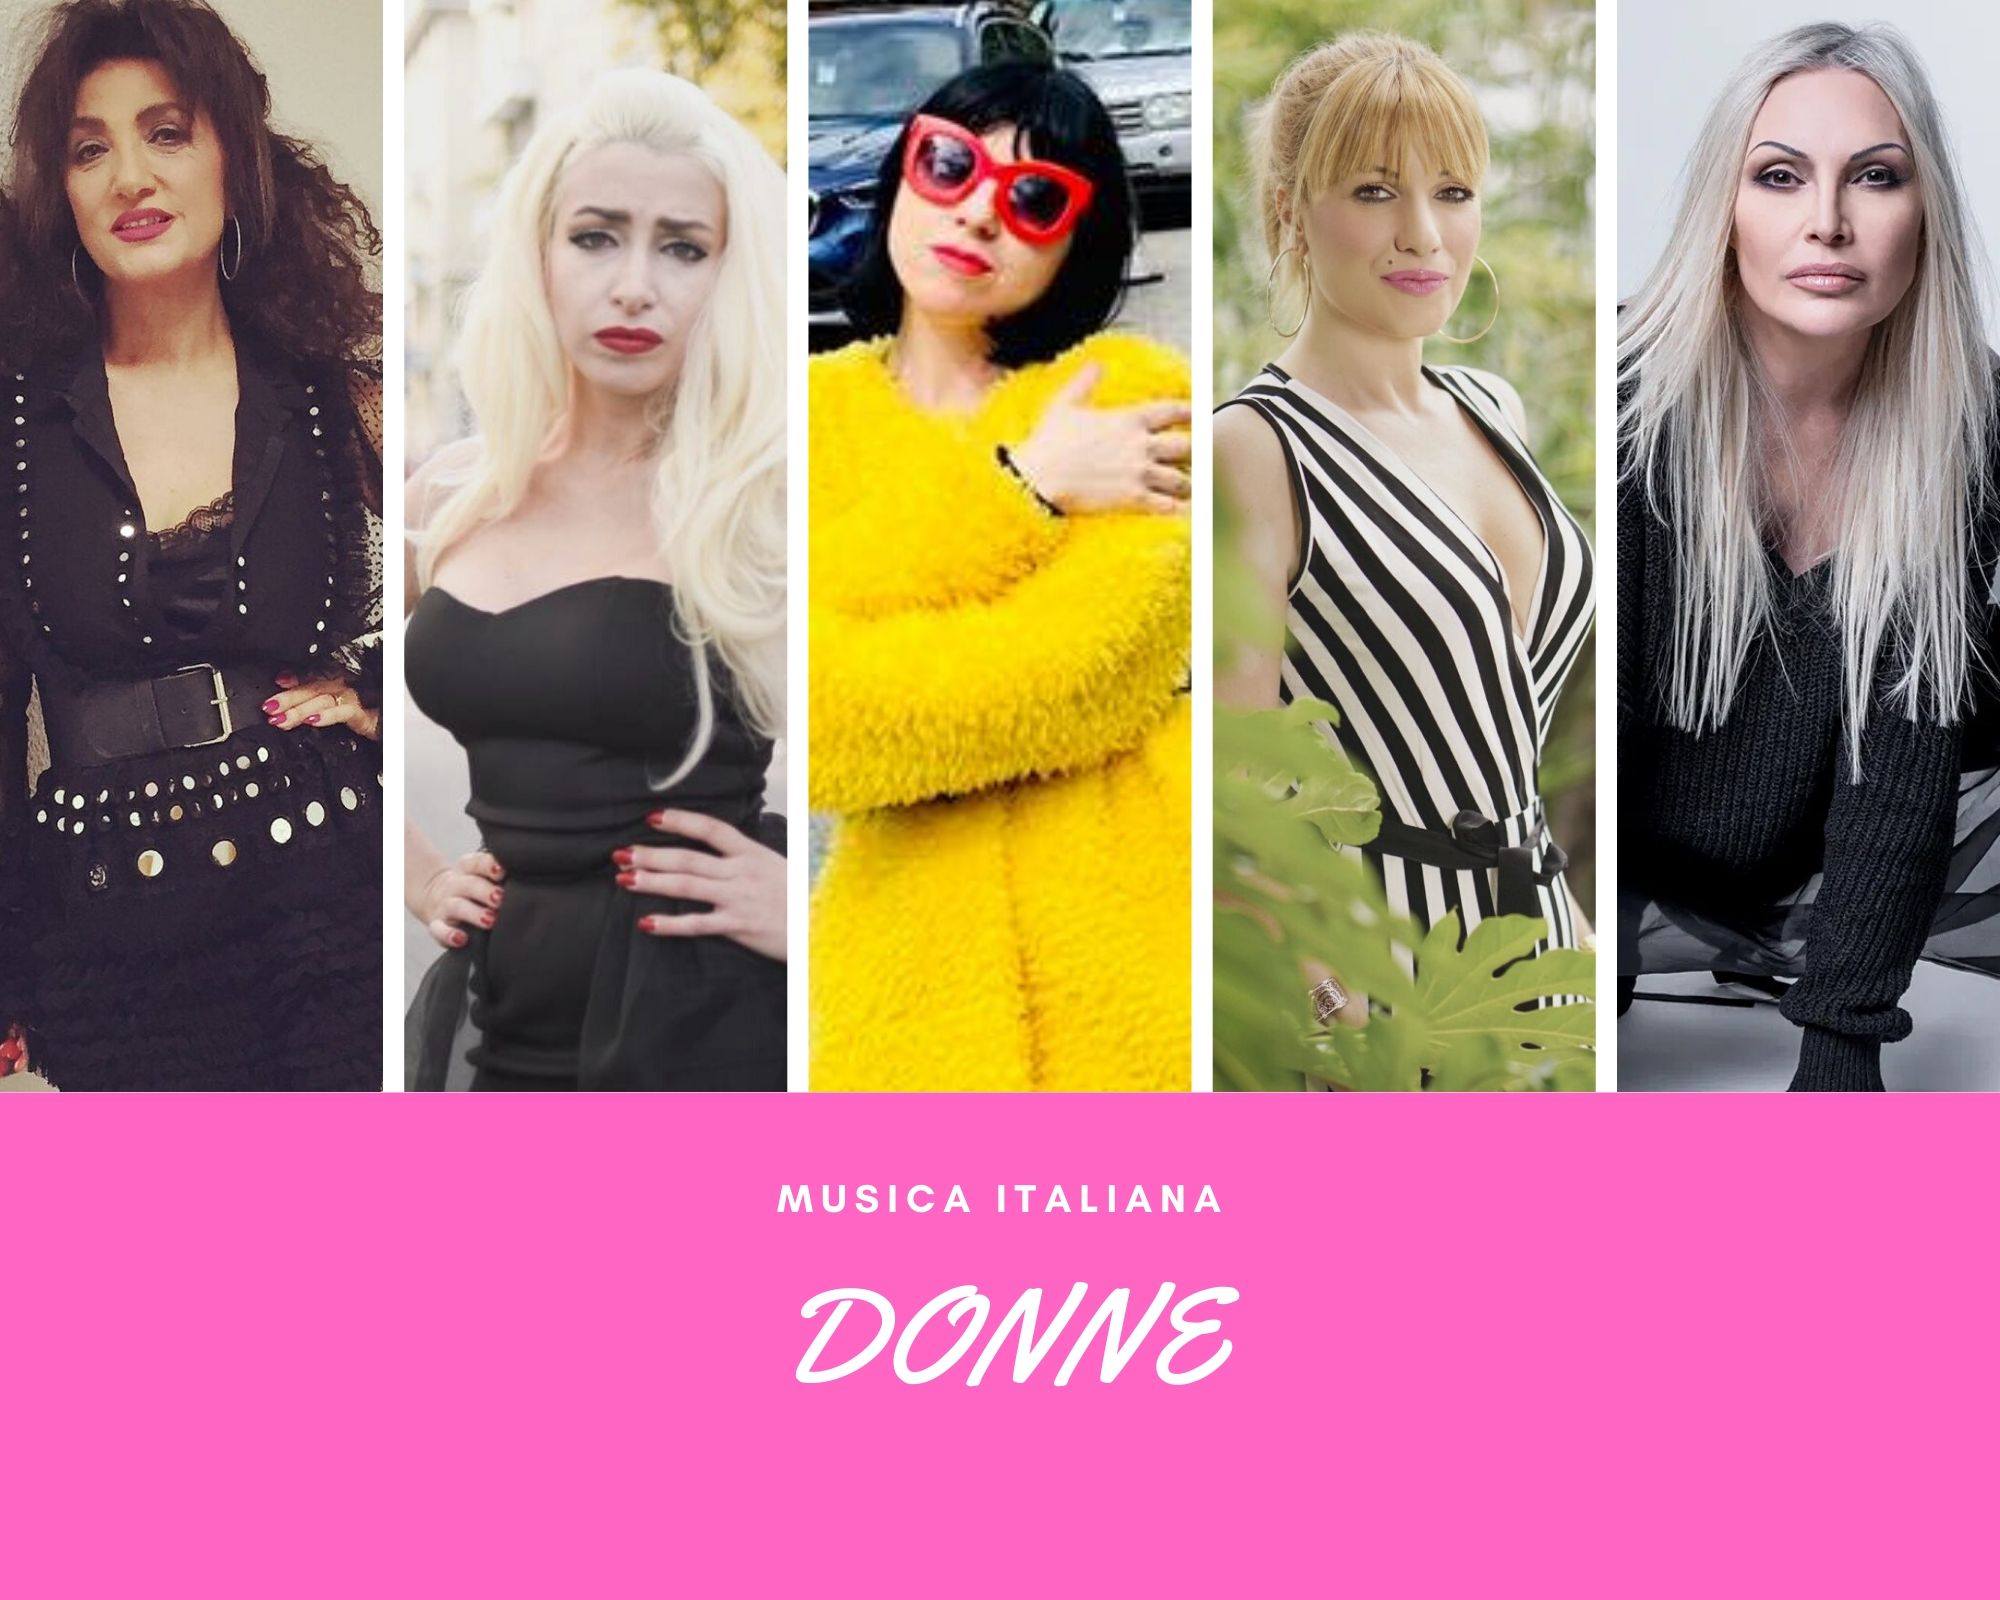 Donne - Musica Italiana - Marcella Bella, Romina Falconi, Roberta Giallo, Lisa, Anna Oxa.